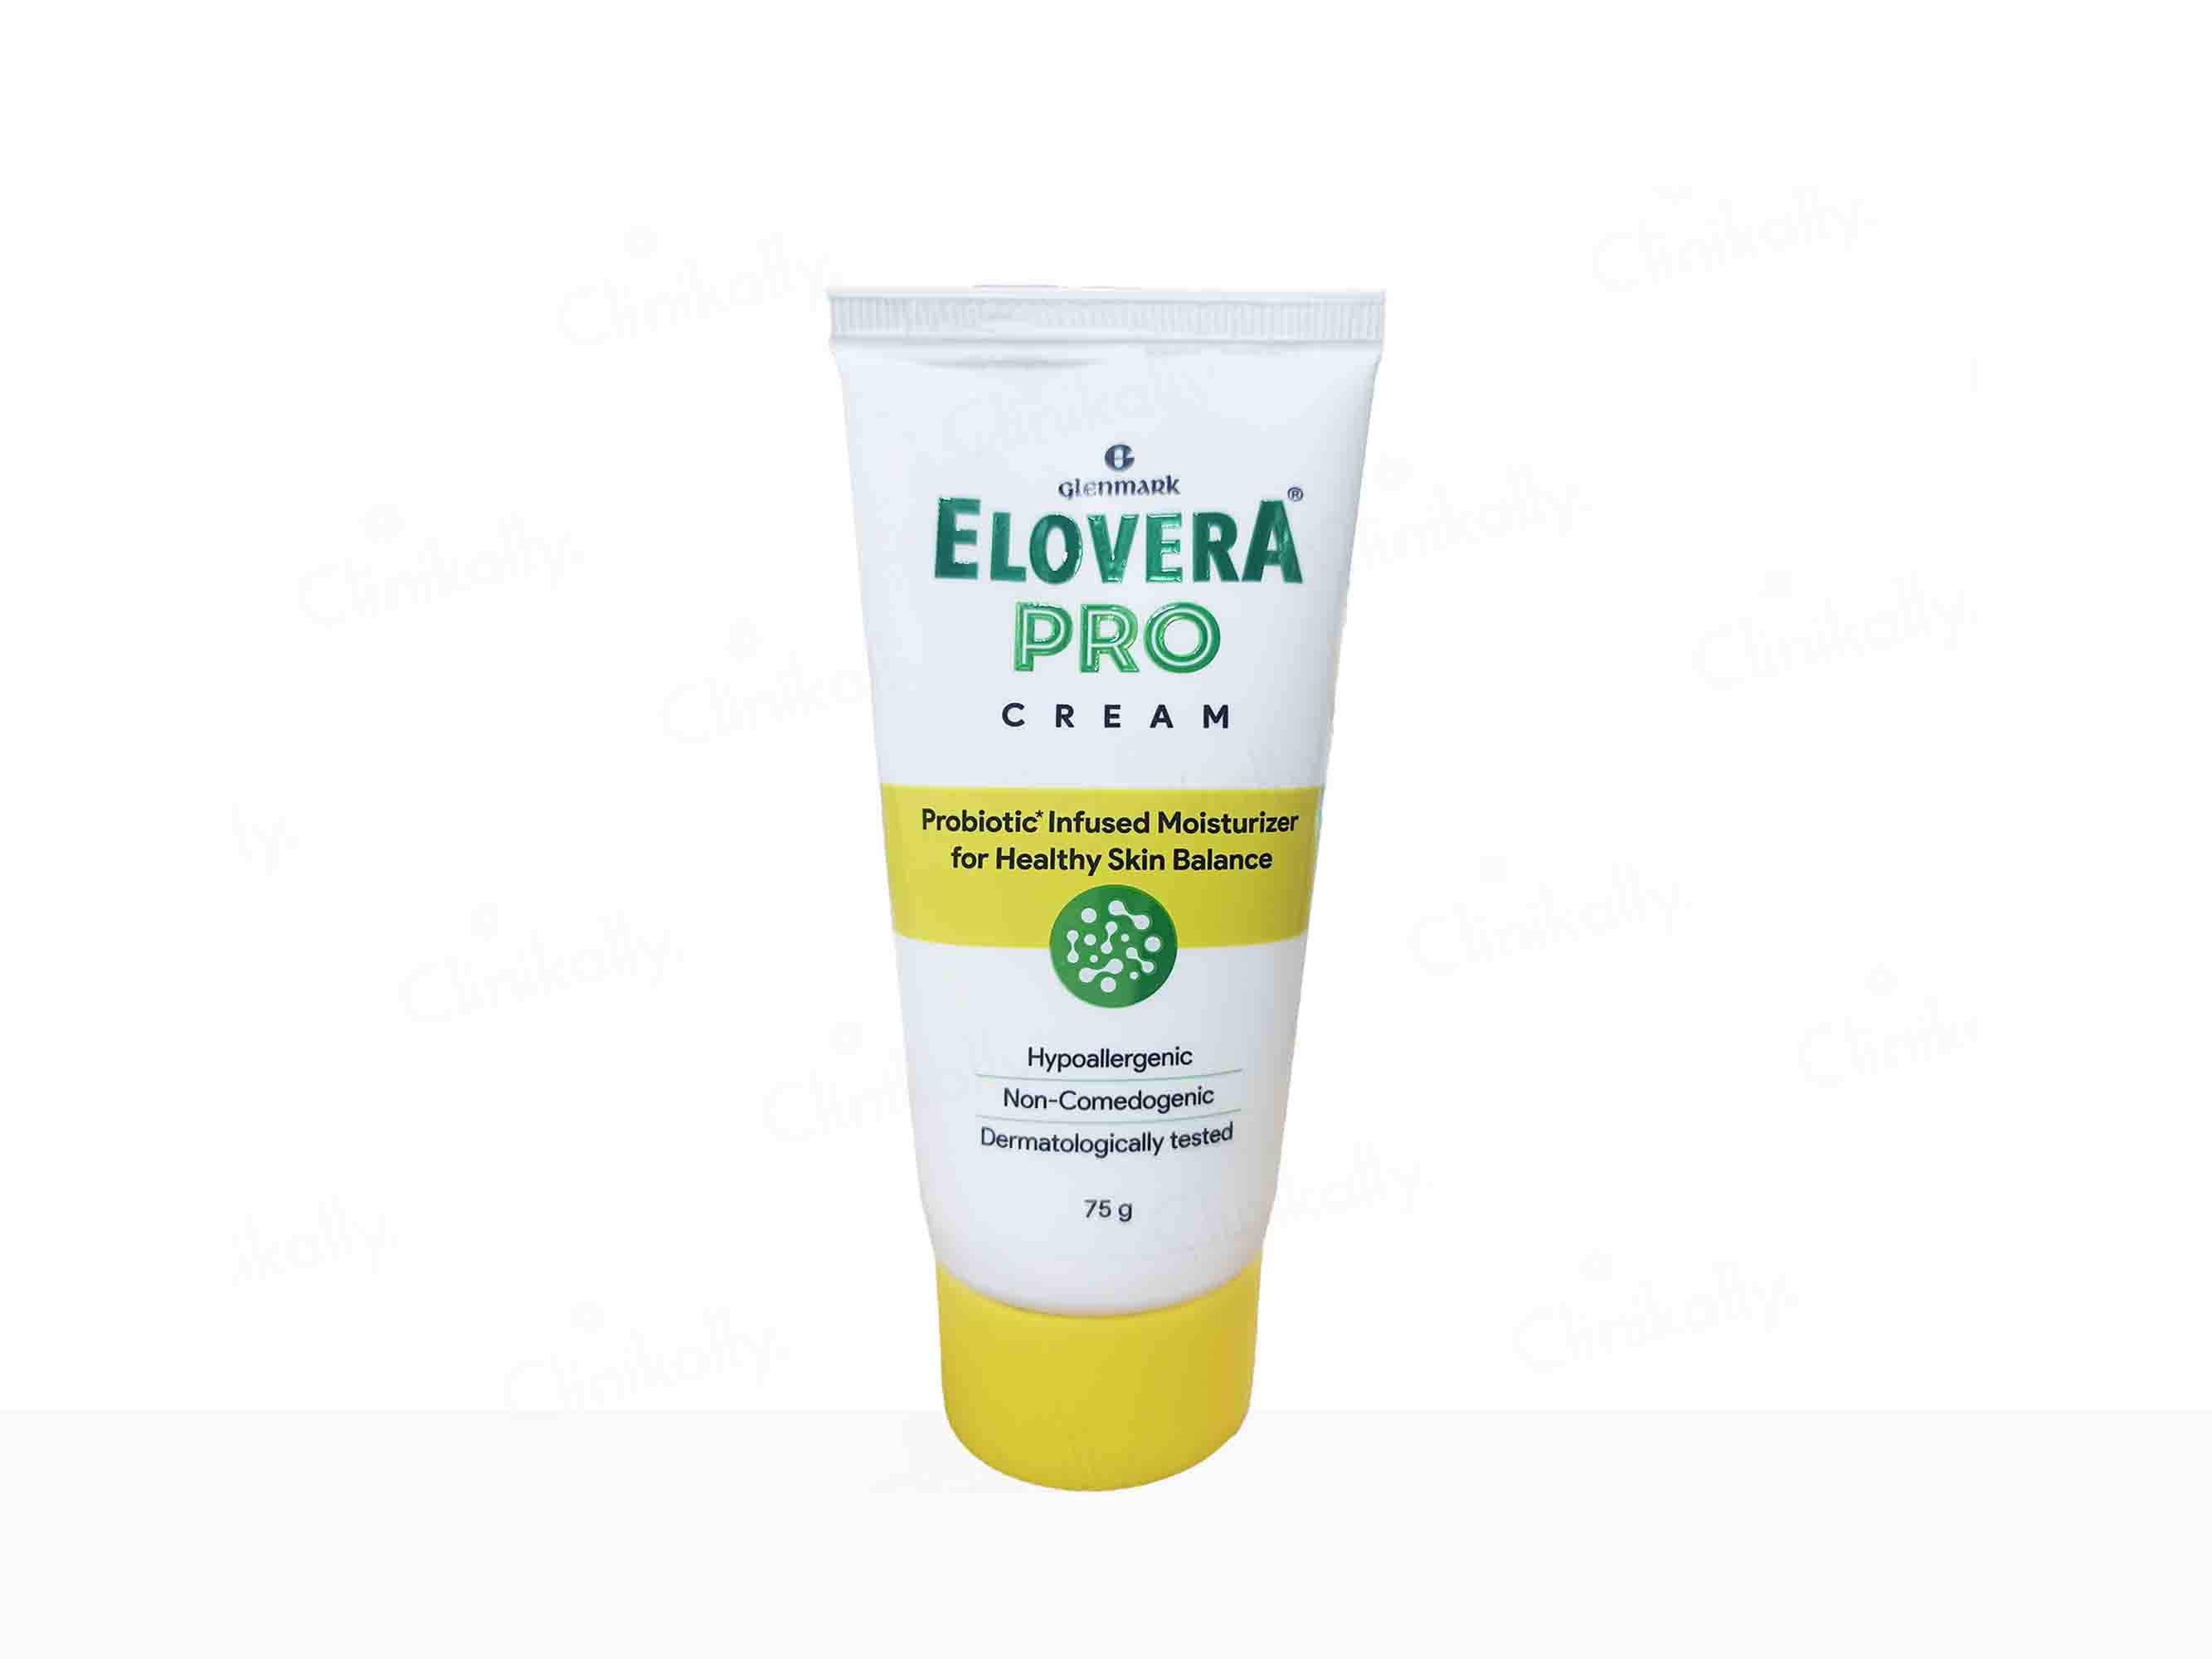 Elovera Pro Probiotic Infused Moisturizer Cream